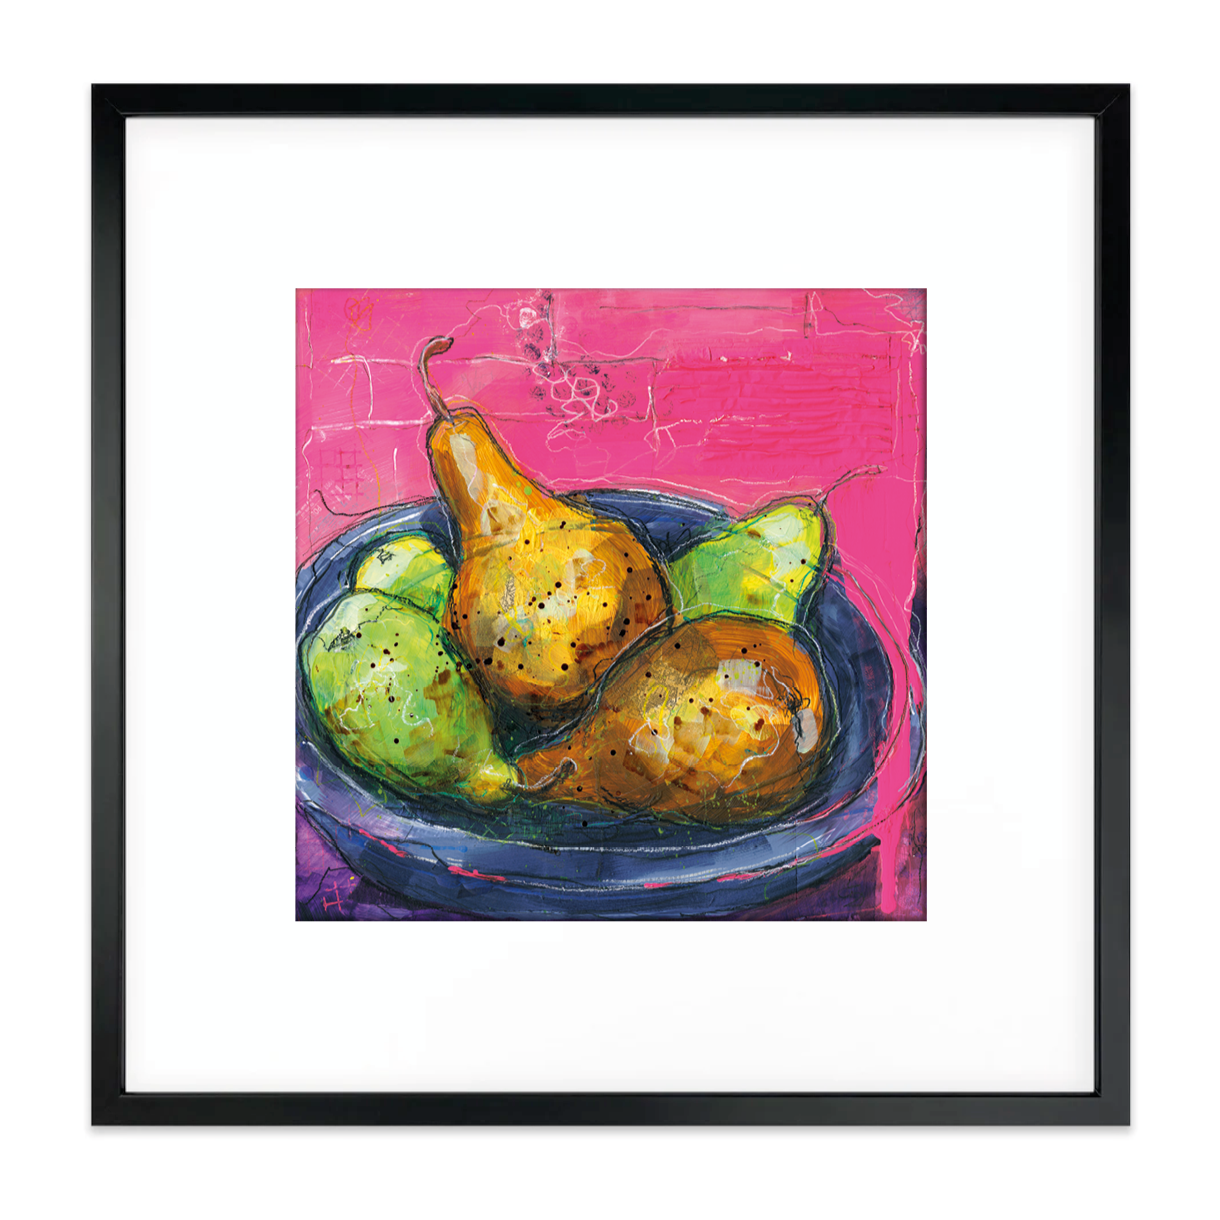 'Fruta - Pears' Contemporary Art Framed Print